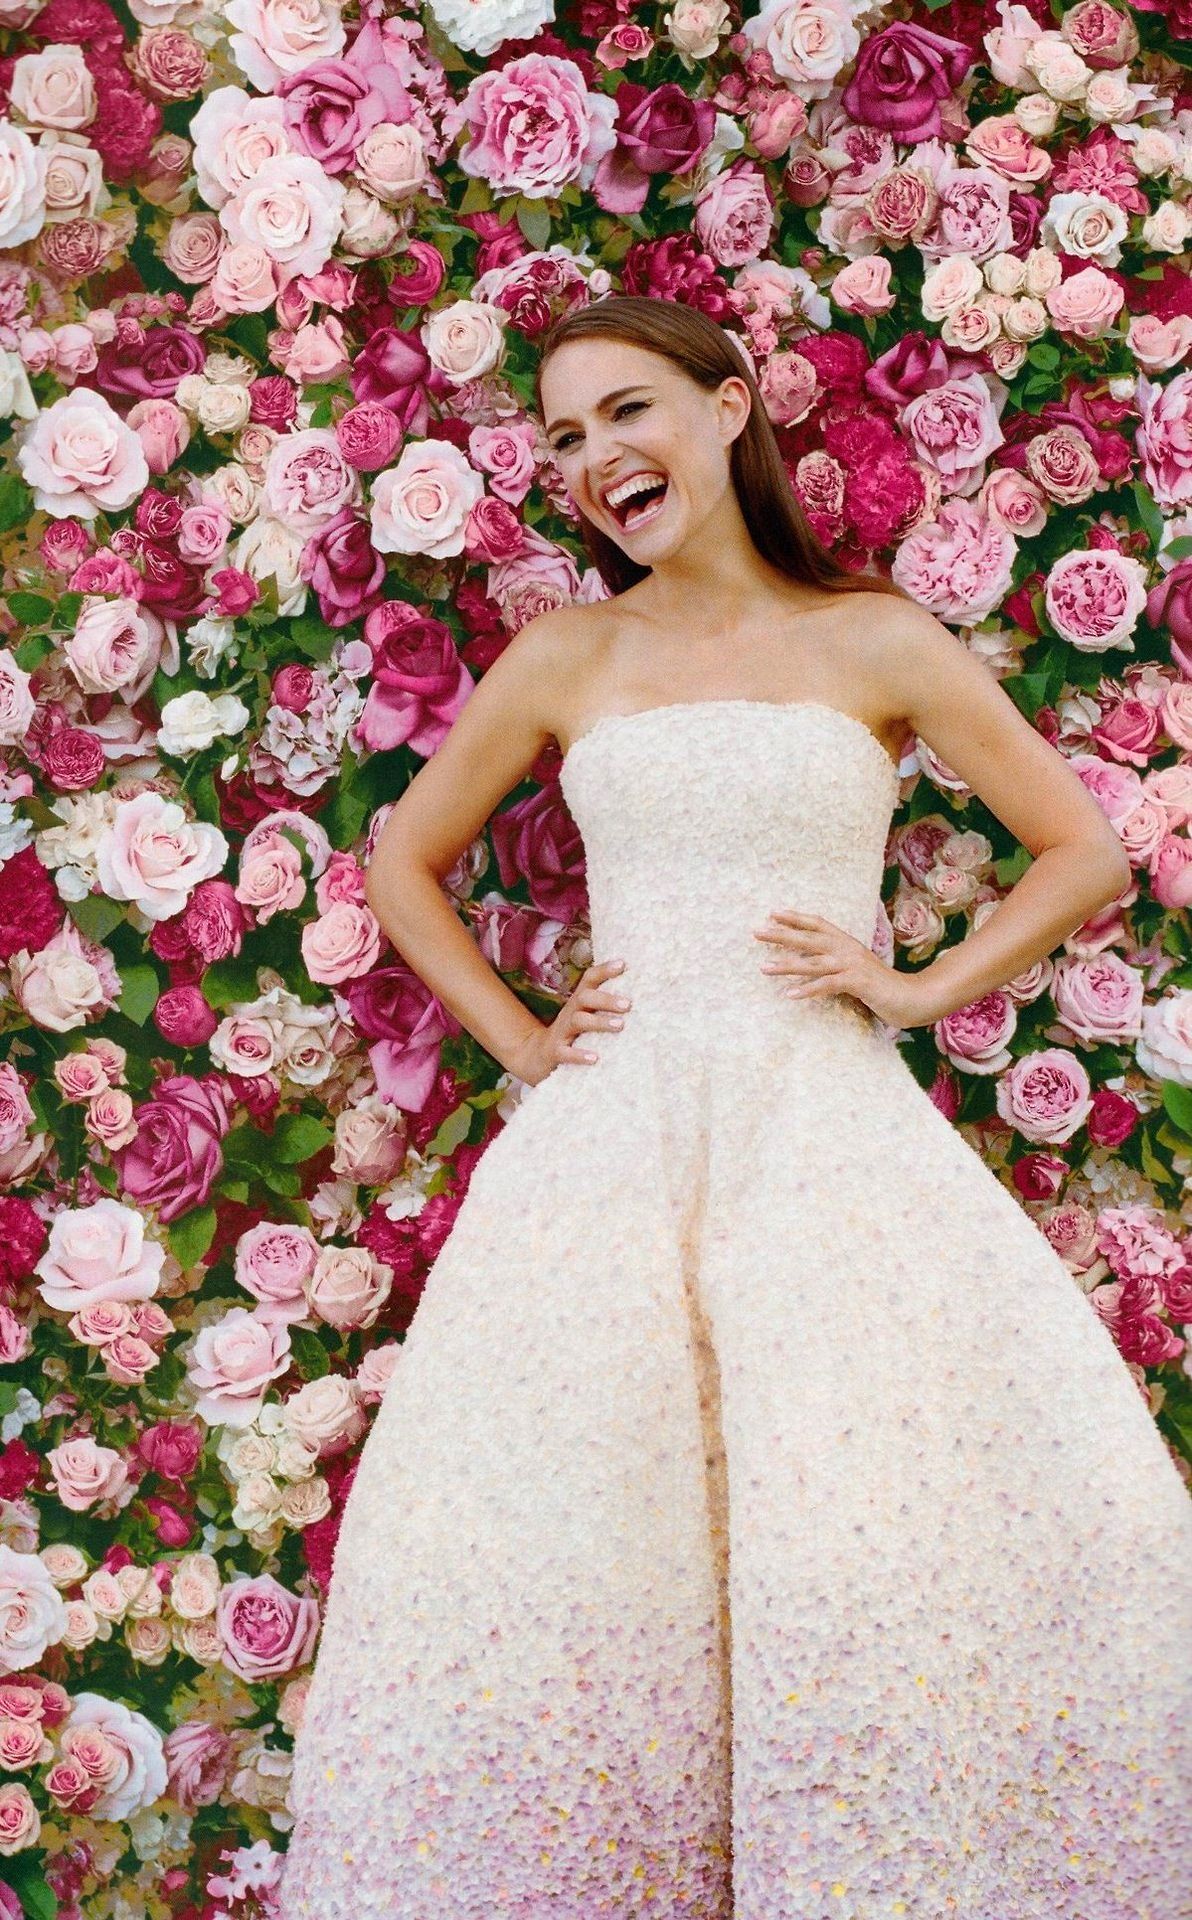 Natalie Portman Miss Dior Campaign Wallpapers